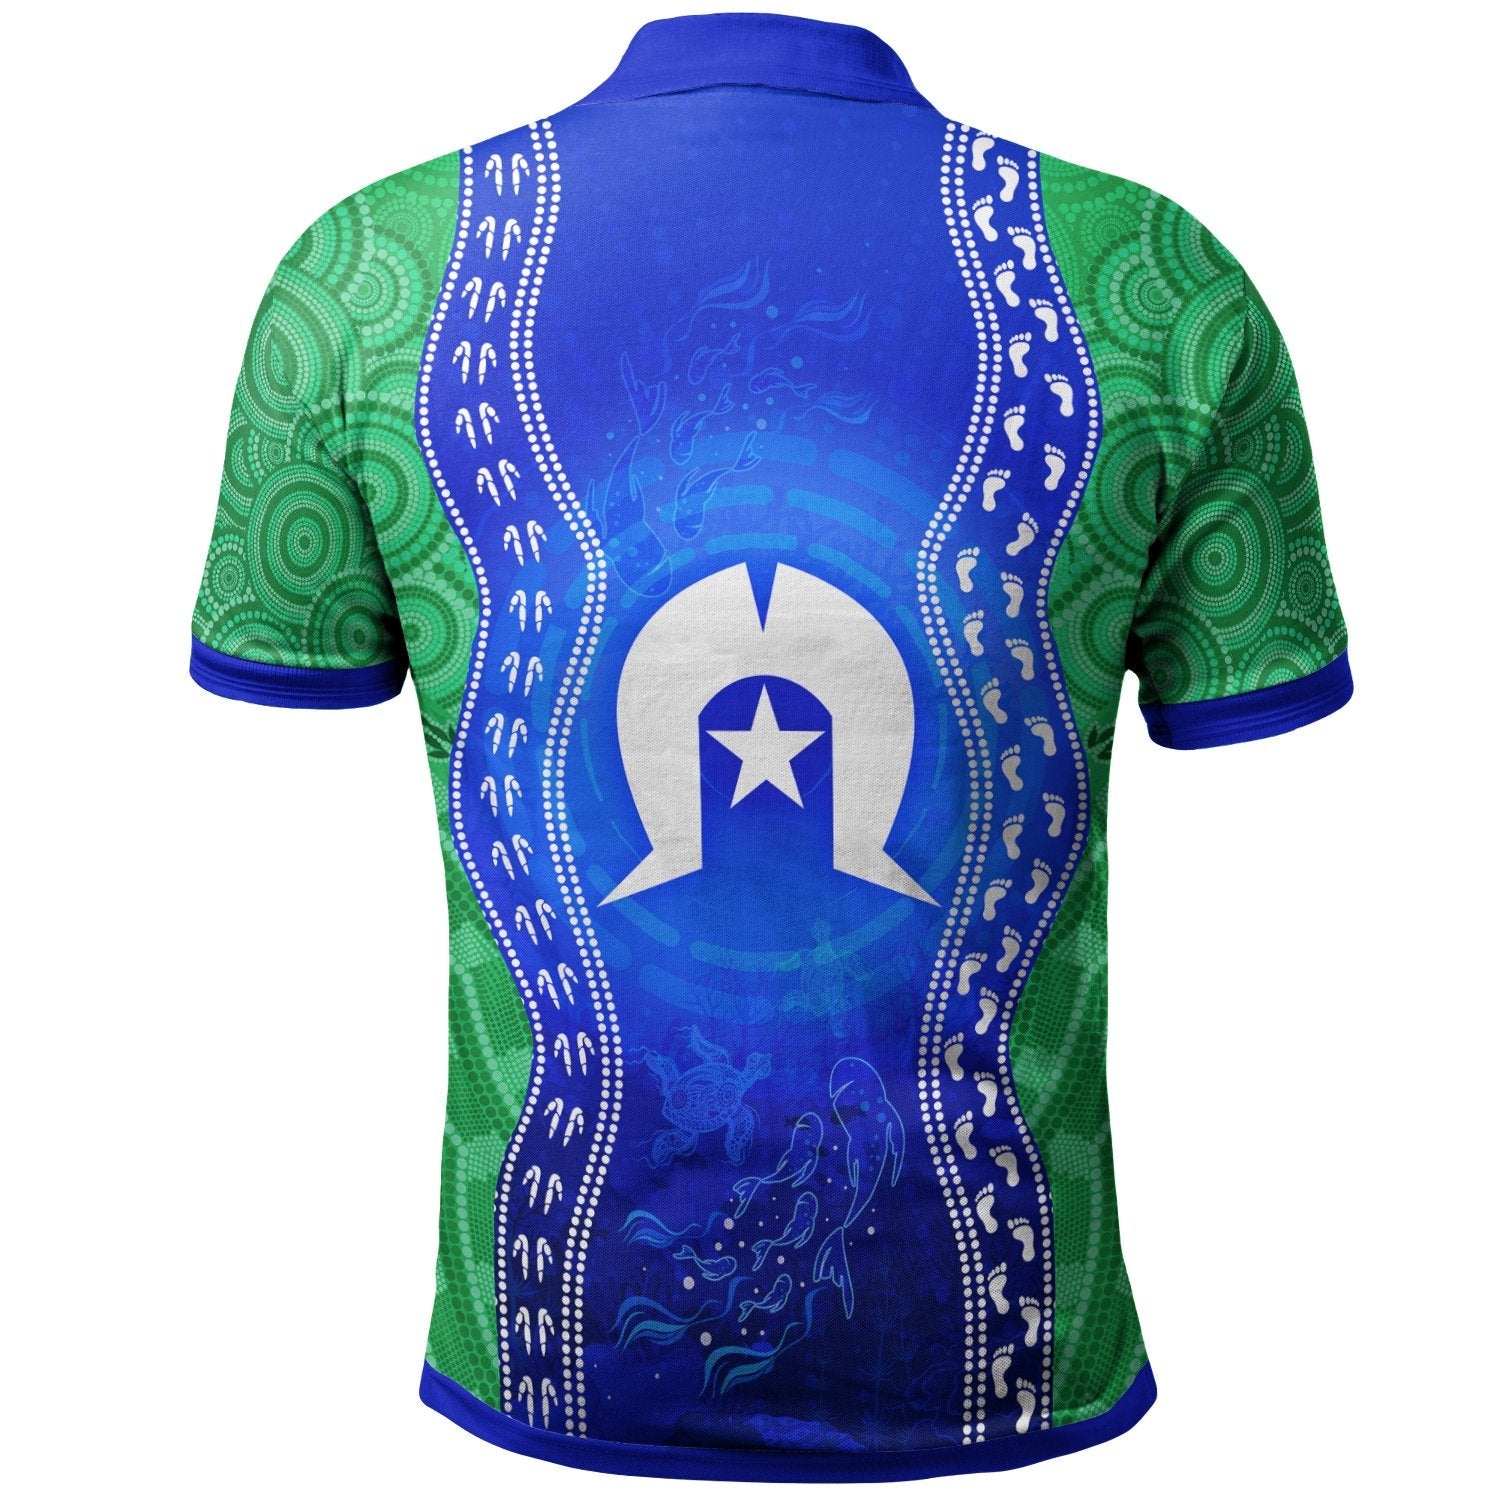 custom-torres-strait-islanders-polo-shirt-torres-symbol-with-aboriginal-patterns